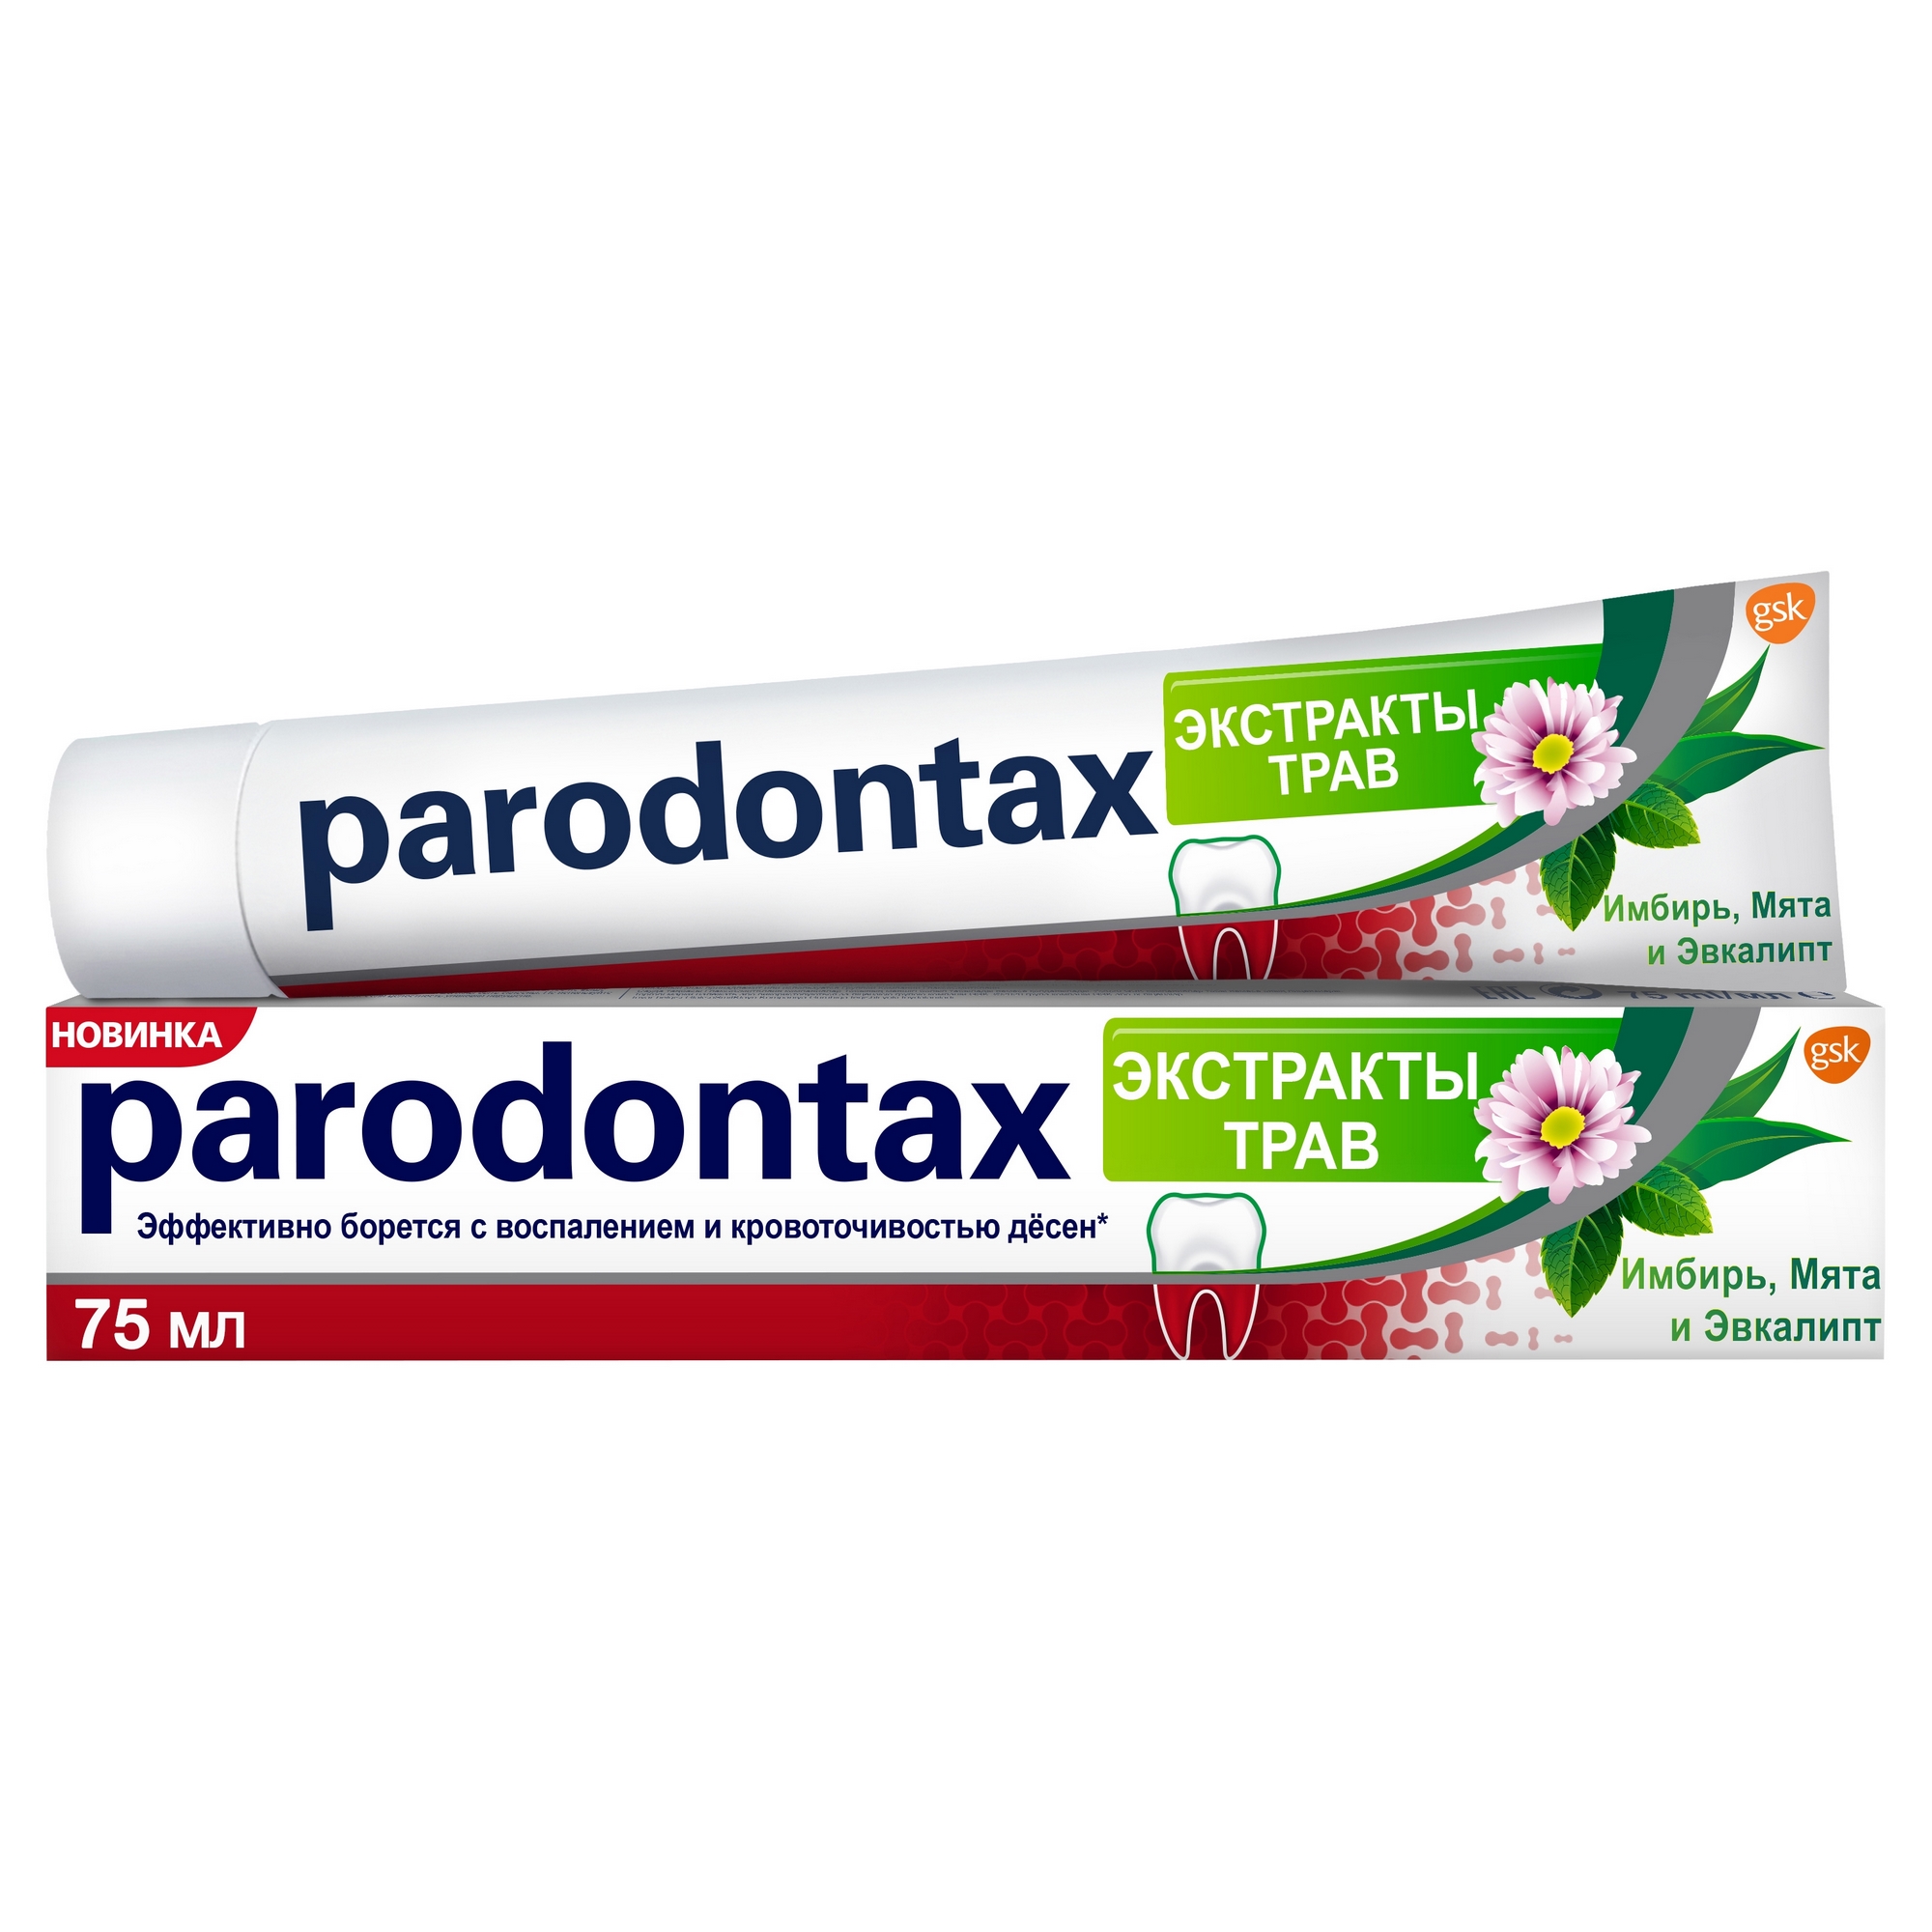 Зубная паста Parodontax Экстракты трав 75 мл зубная паста parodontax комплексная защита 75 мл